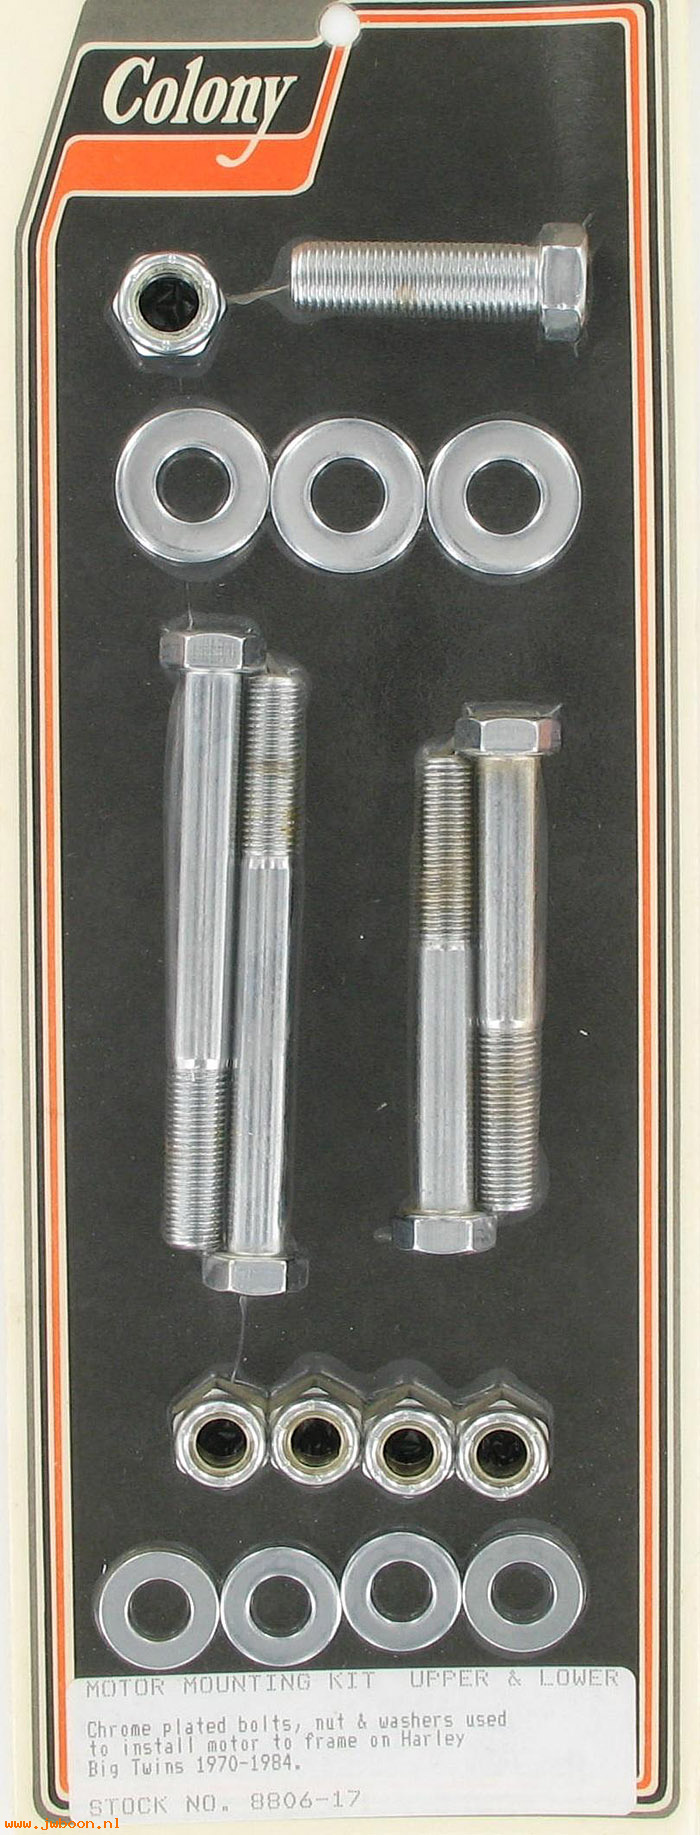 C 8806-17 (): Motor mount kit - Big Twins FL '70-'84, in stock, Colony